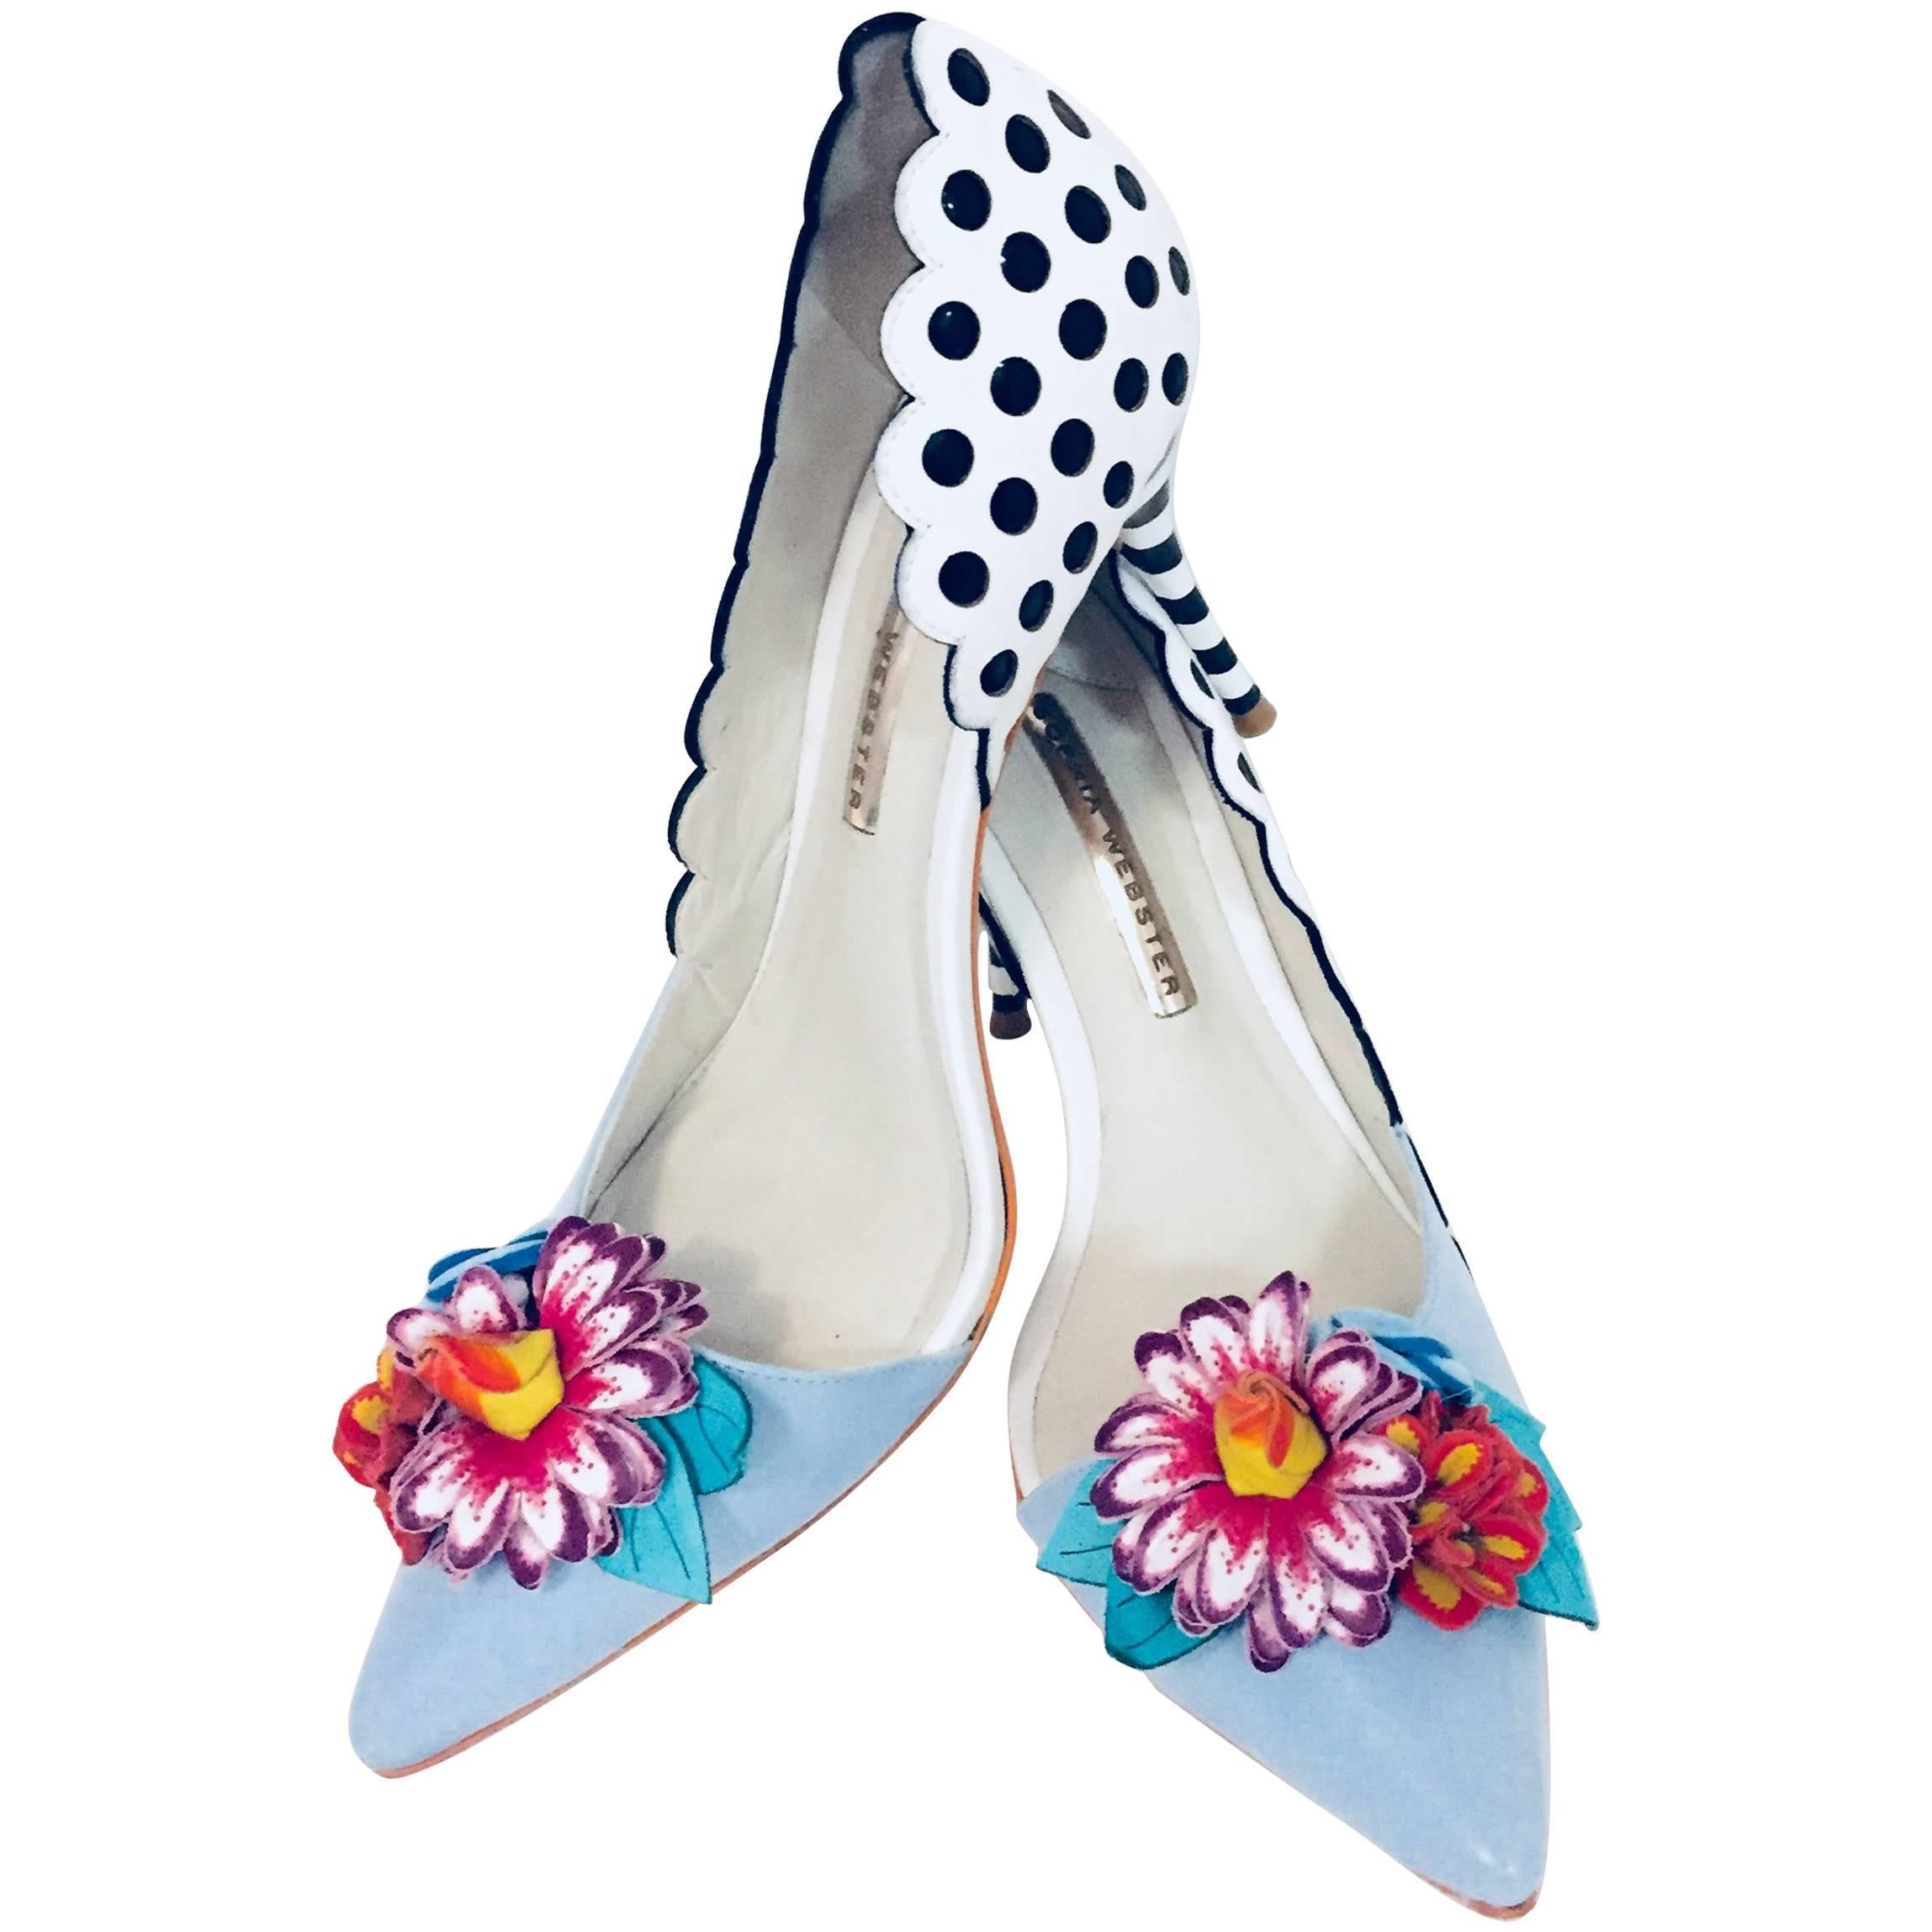 Sensational Sophia Black & White Polka Dots Dorsay Pumps w/ Embellished Flowers